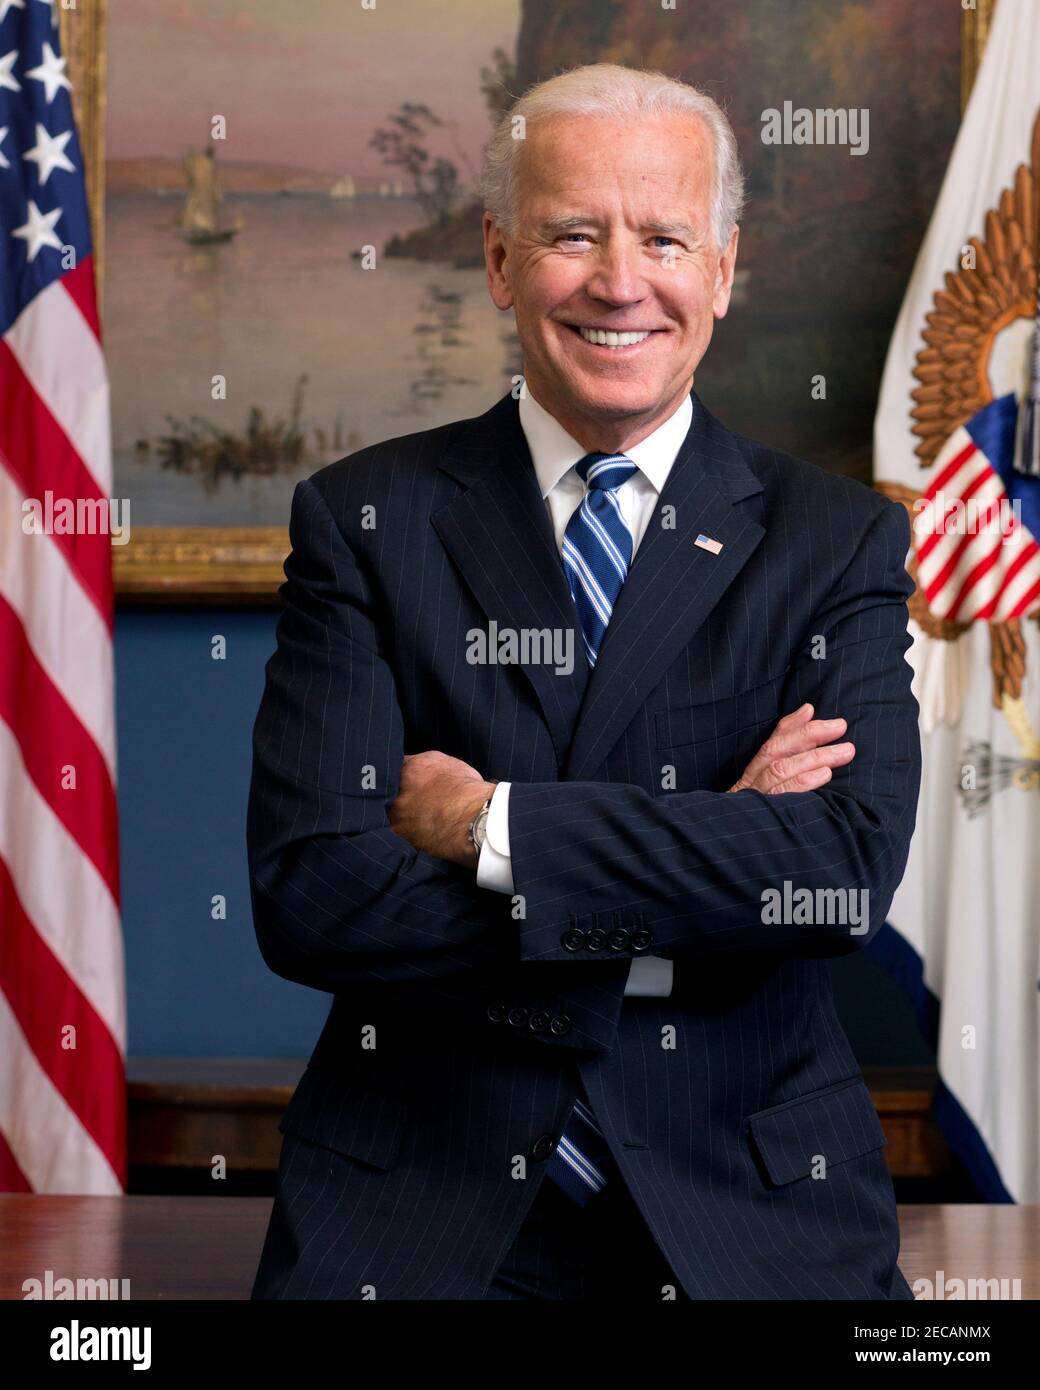 Joe Biden. Portrait of the 46th President of the United States, Joseph Robinette Biden Jr. (b.1942) as Vice-President in 2013. Official White House photo. Stock Photo